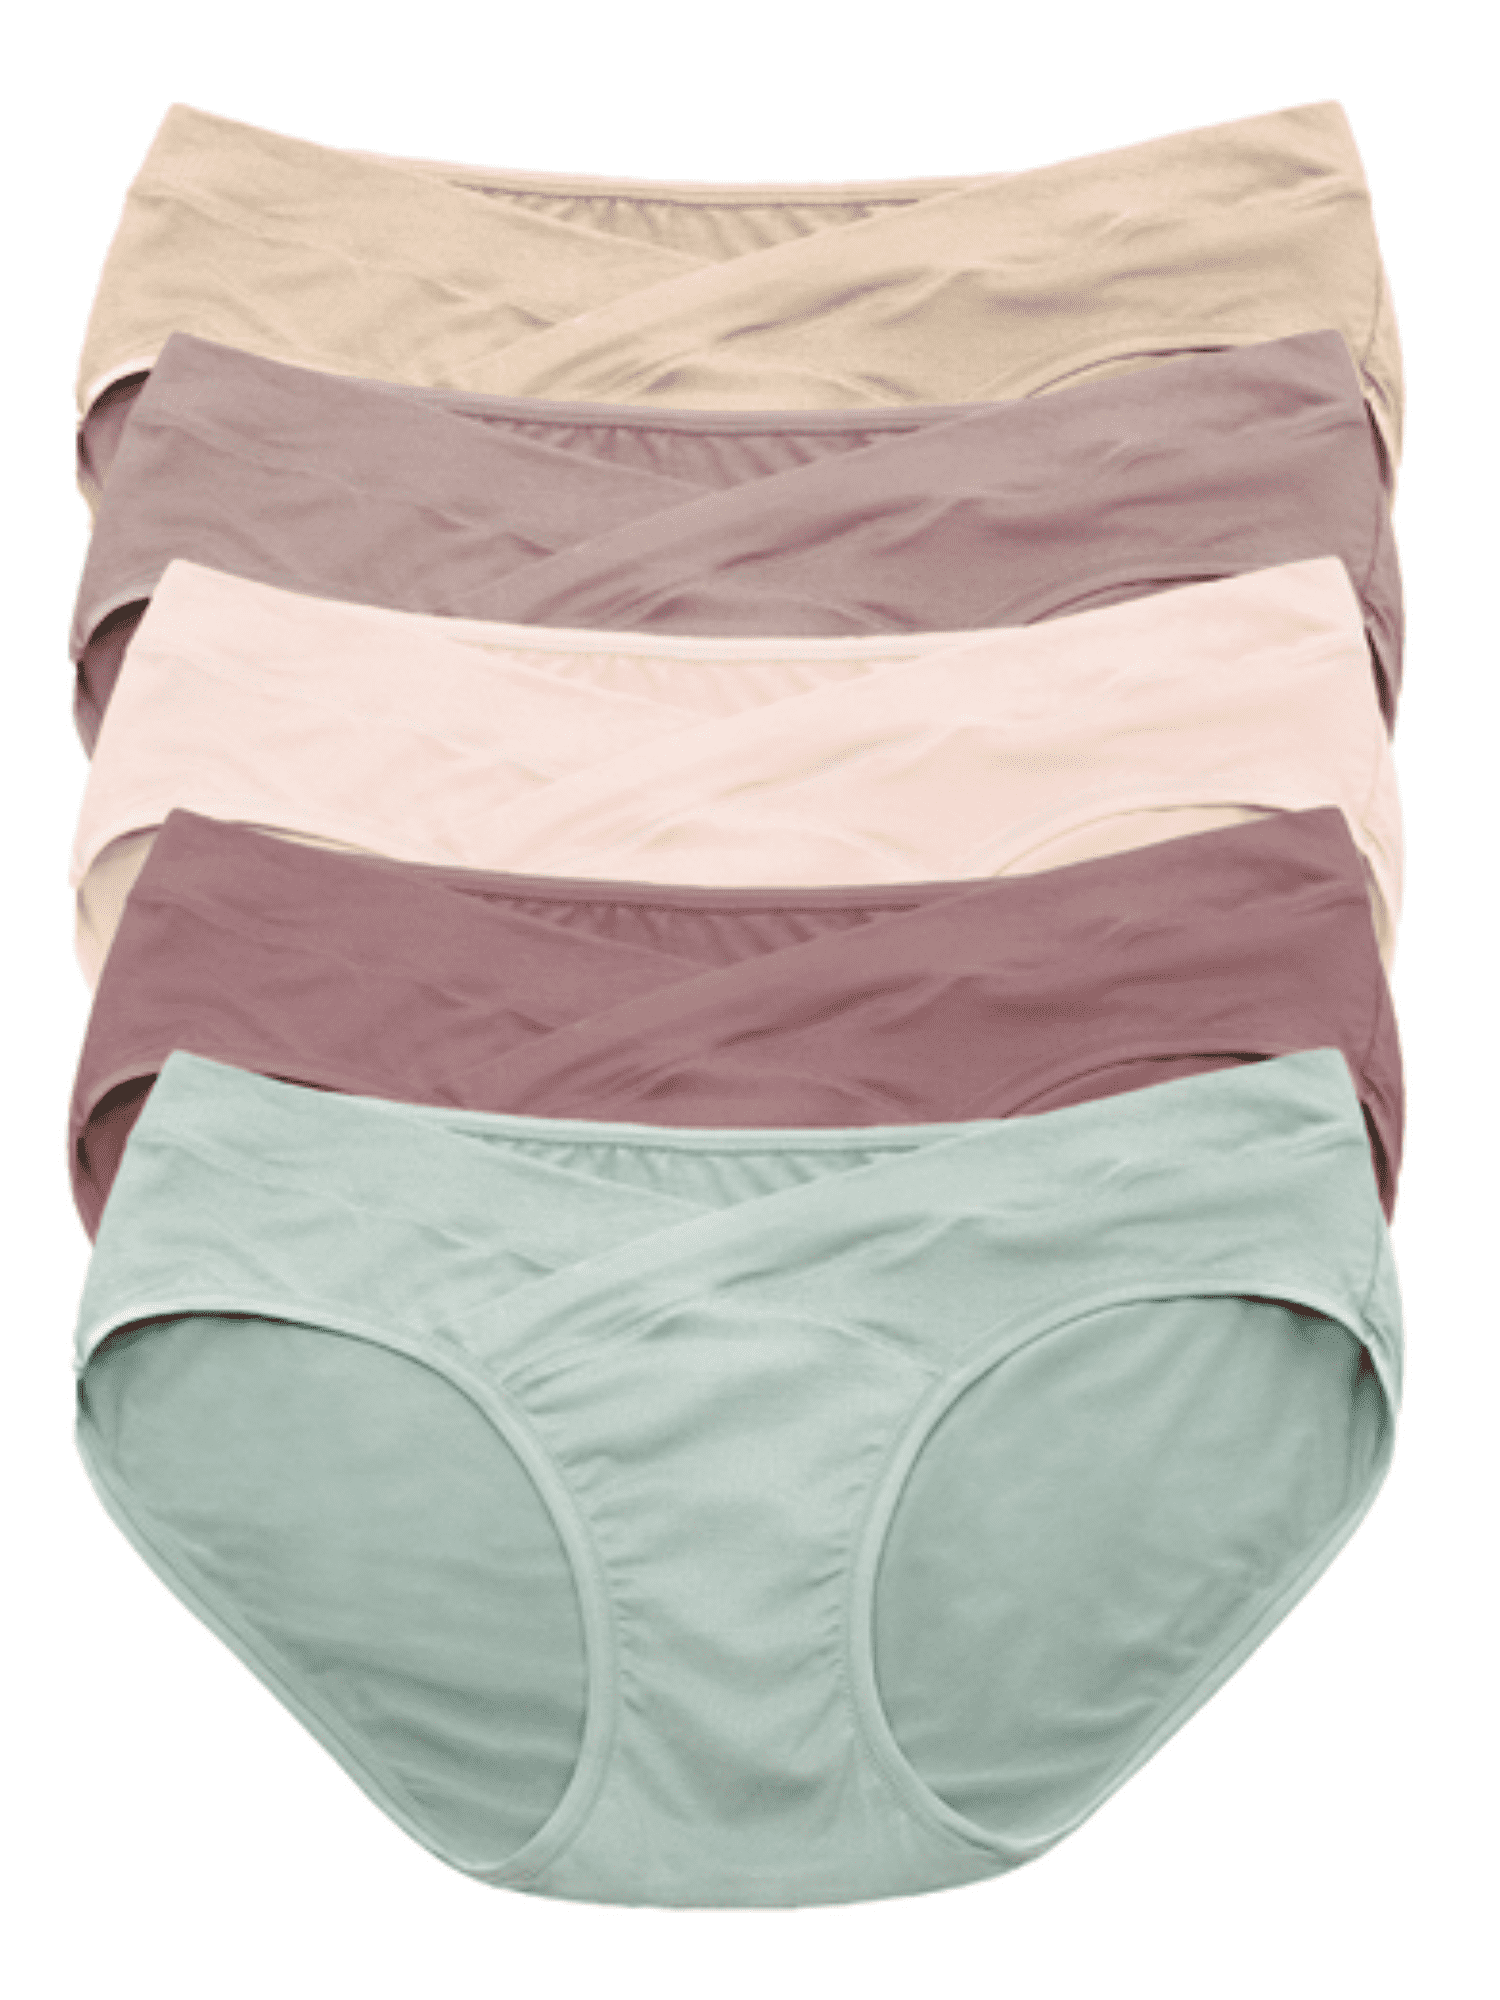 Emprella Maternity Underwear Under Bump, 5 Pack Panties for